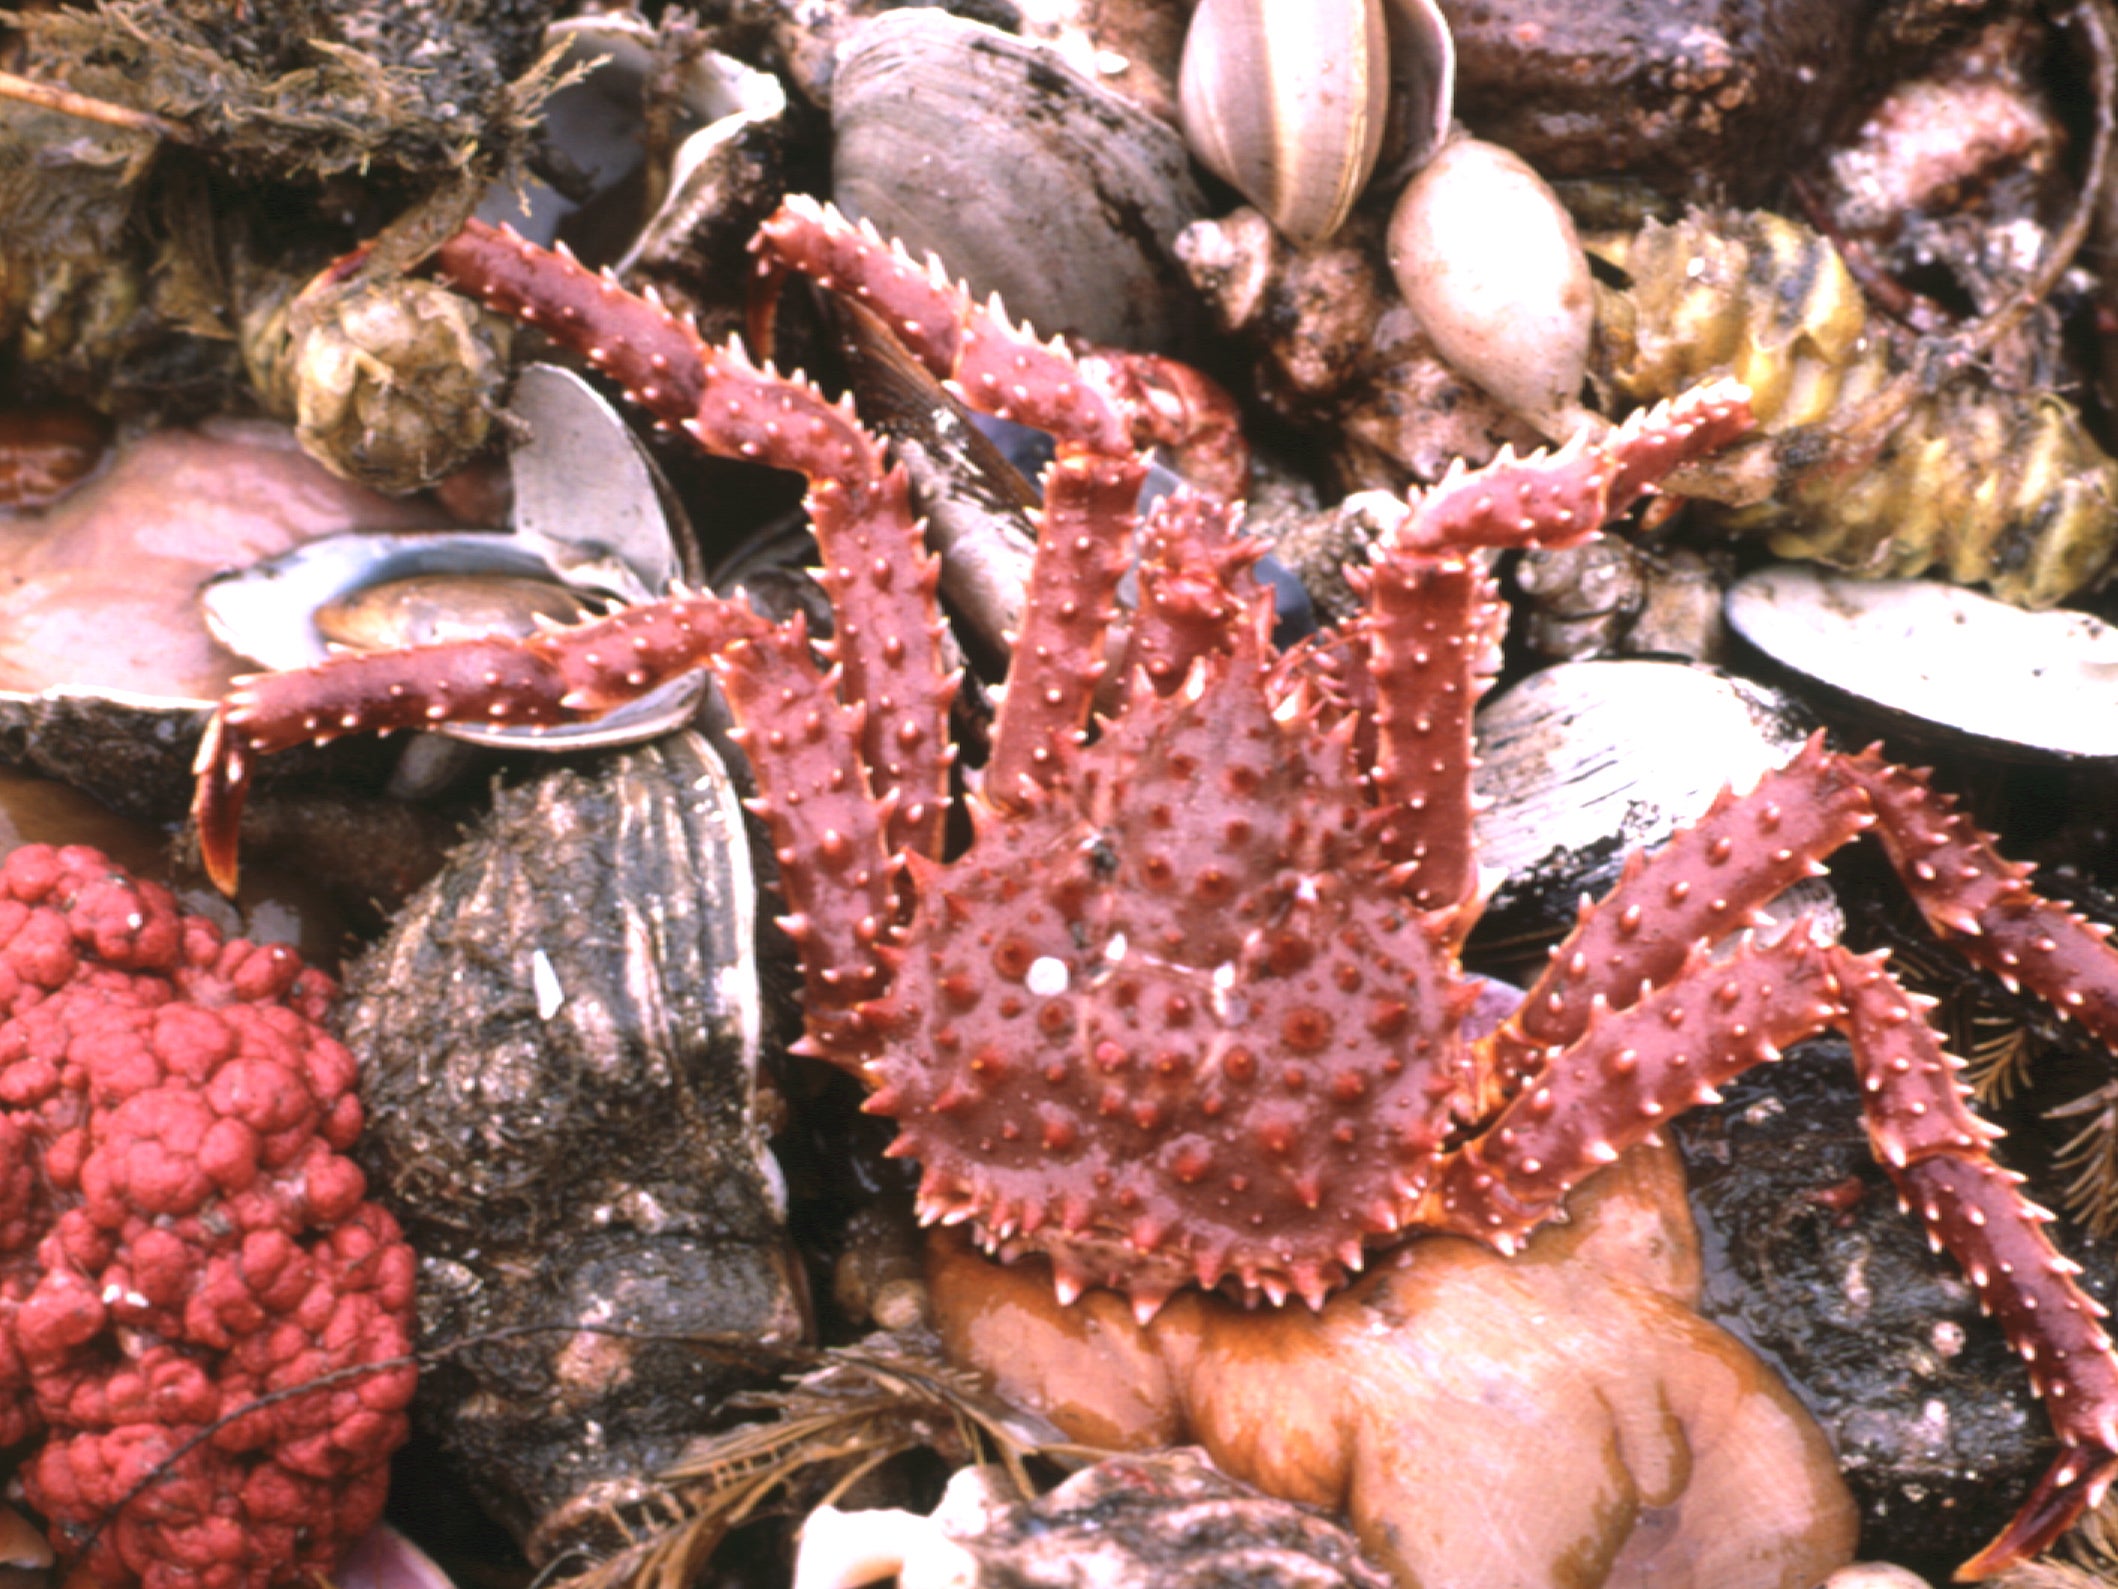 Bottom-dwelling invertebrates in the East Bering Sea